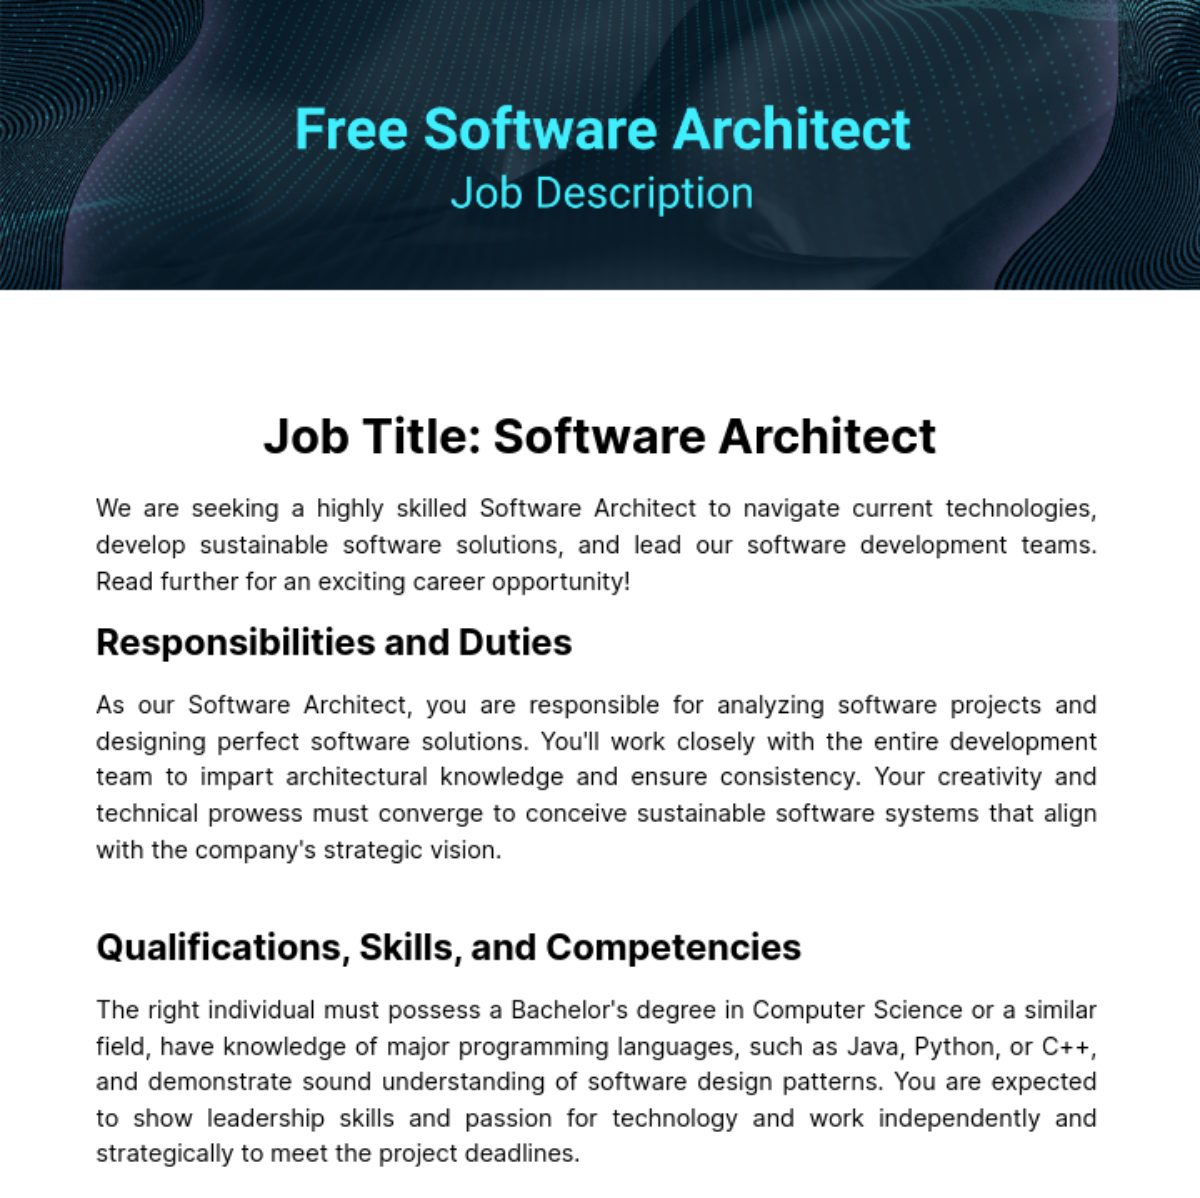 Free Software Architect Job Description Template